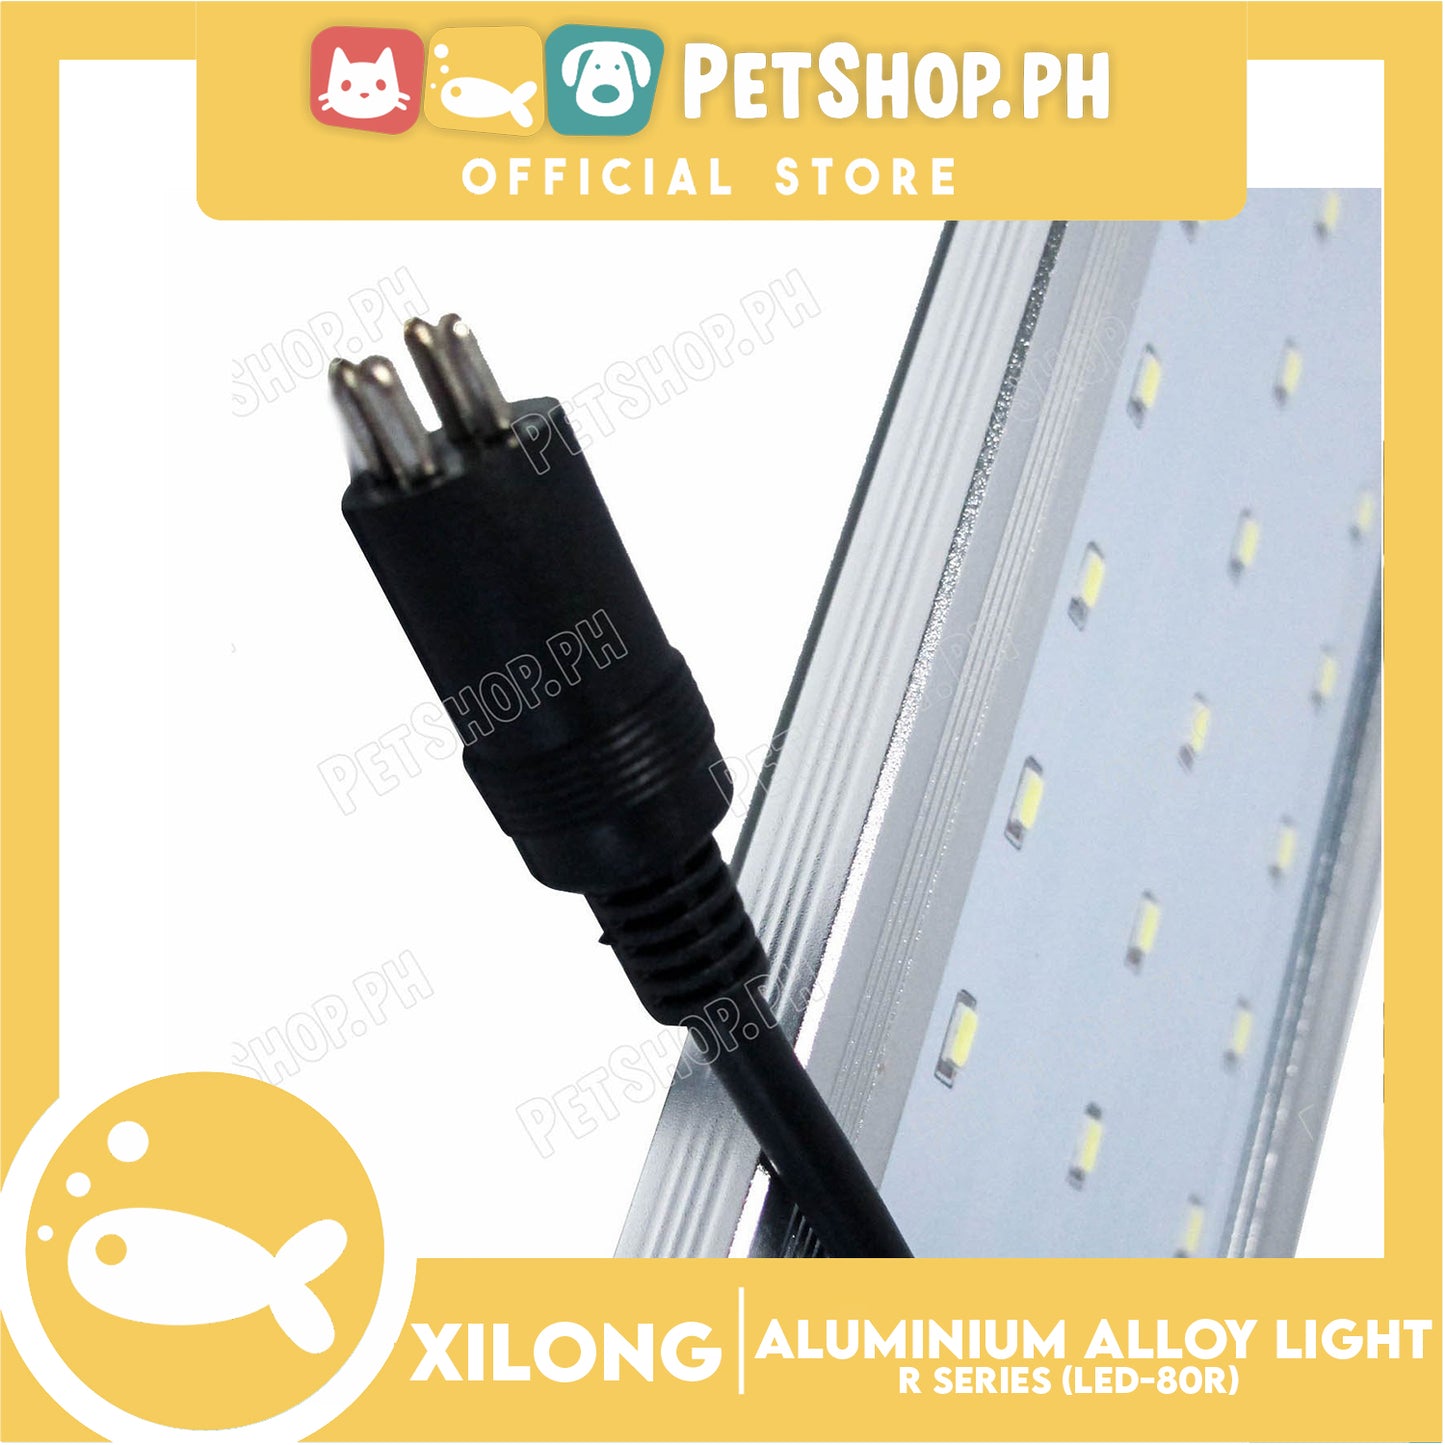 LED-80R Alloy Alum Bracket Light 29w